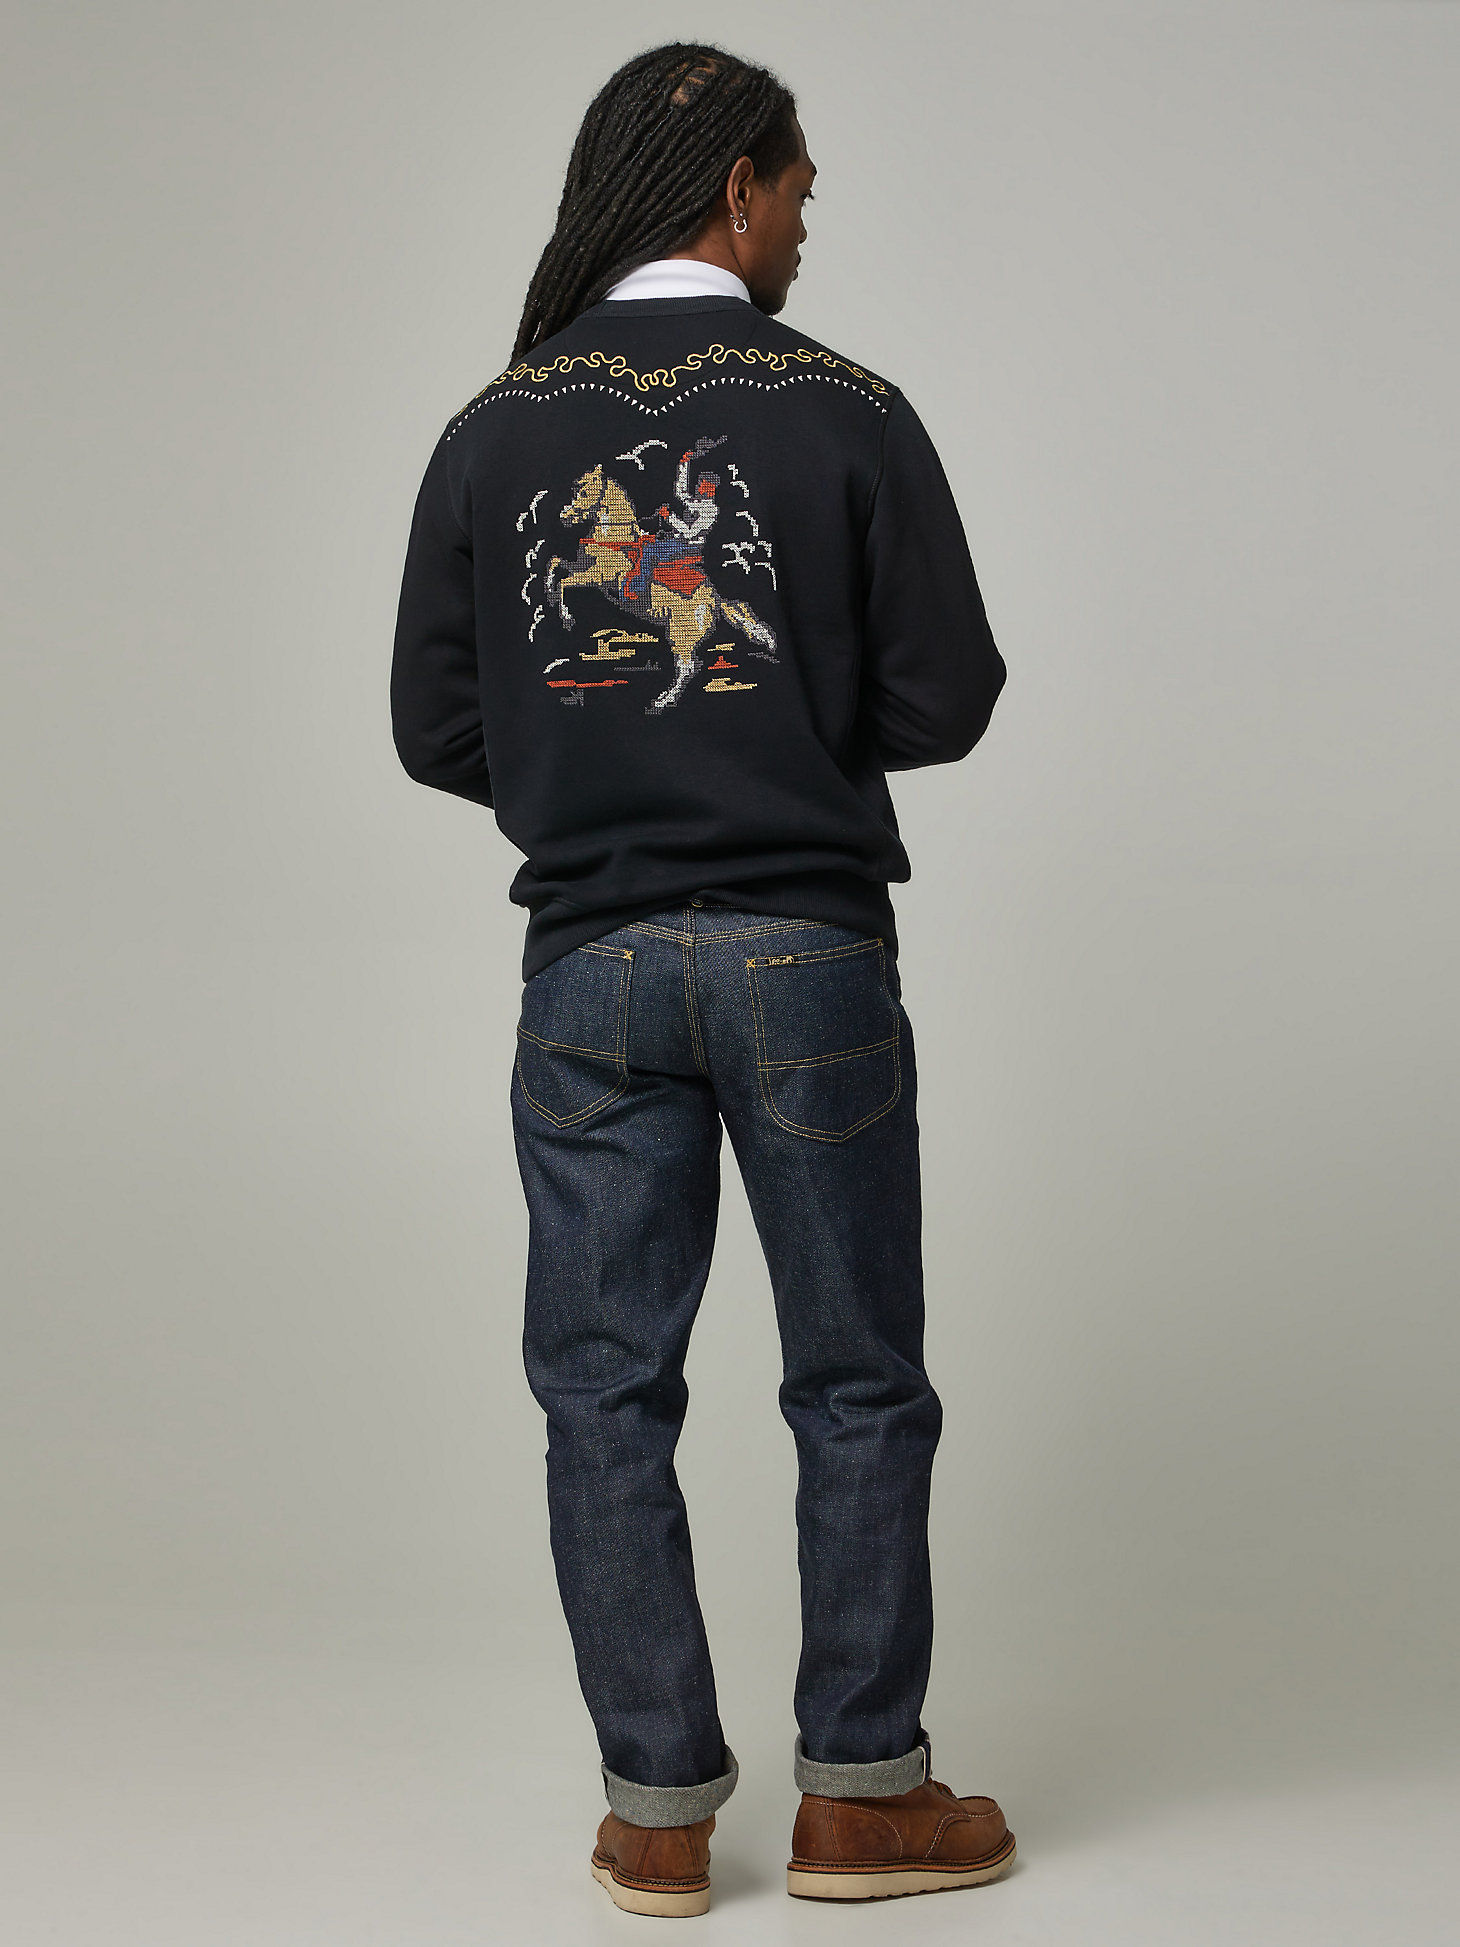 Lee® x The Brooklyn Circus® Cowboys Graphic Sweatshirt in Black alternative view 7